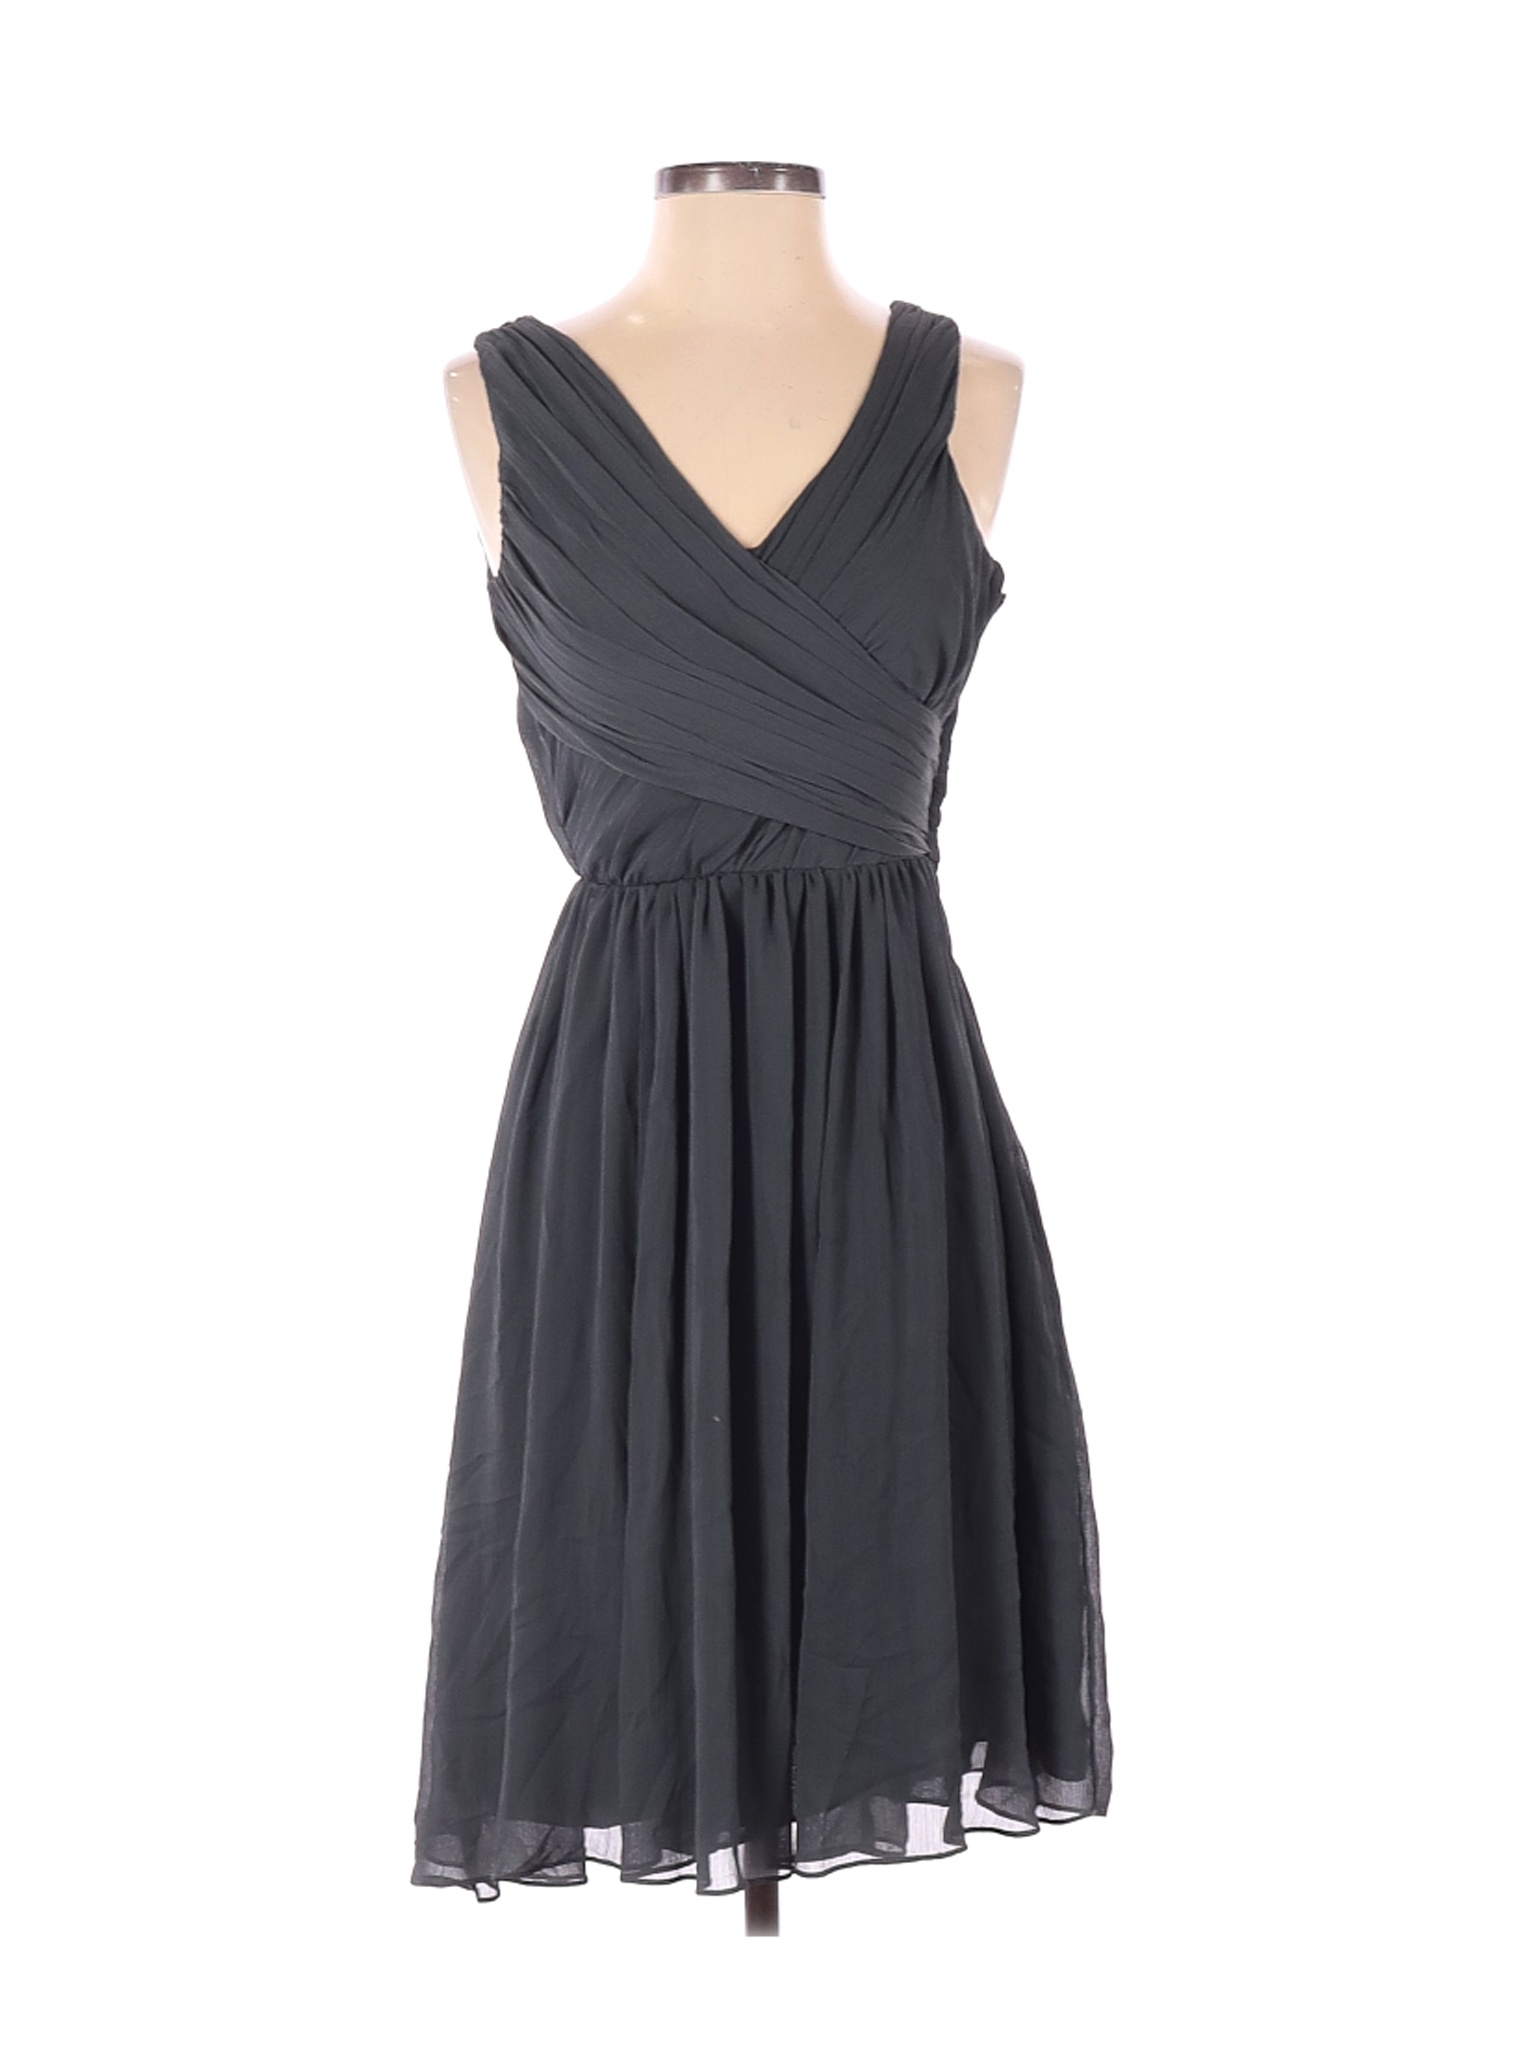 H&M Women Gray Cocktail Dress 2 | eBay